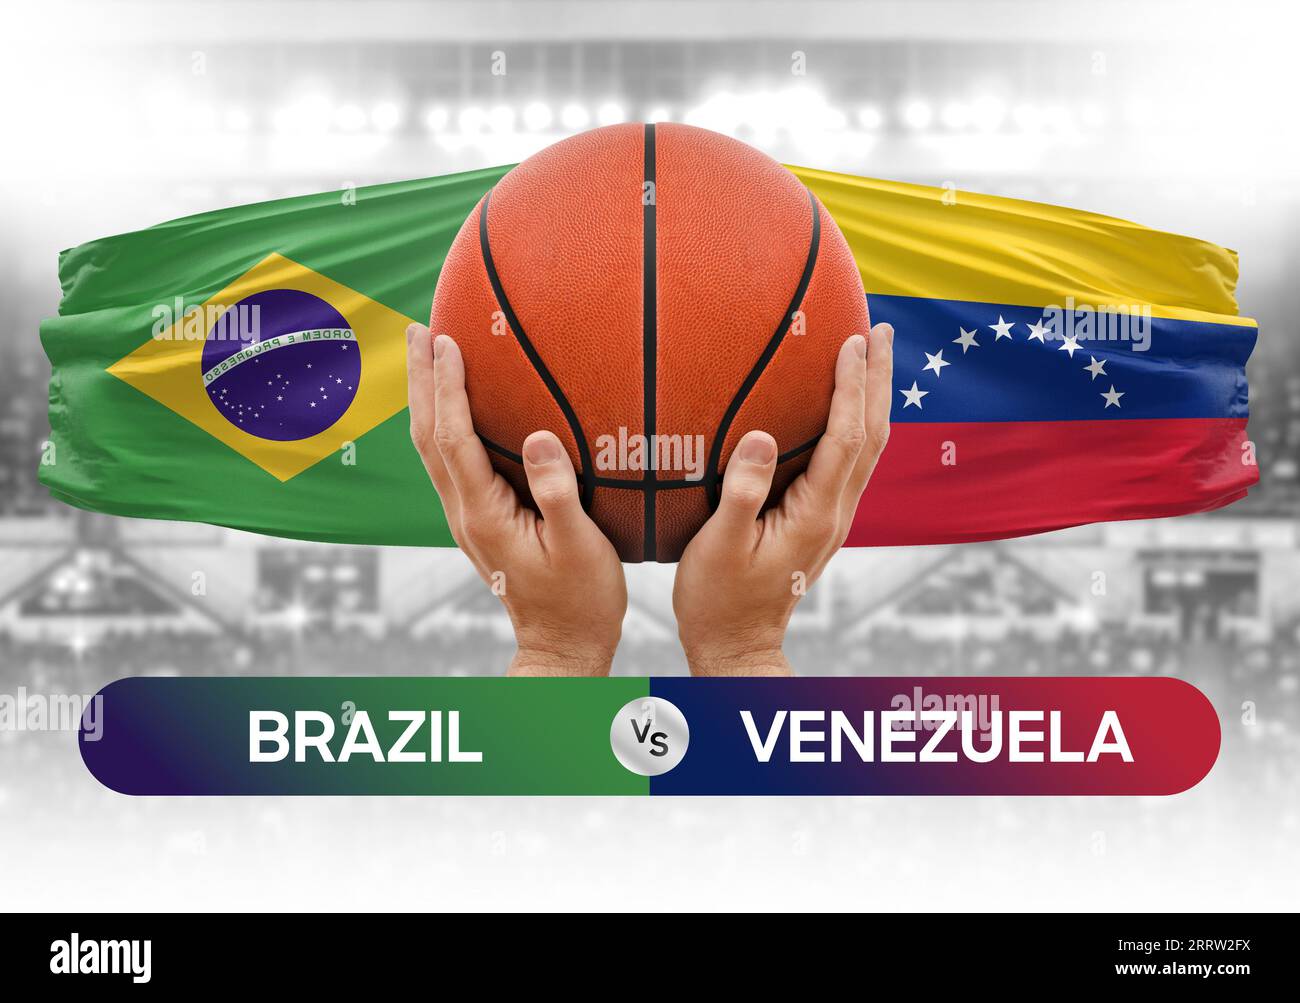 Brazil vs Venezuela national basketball teams basket ball match competition cup concept image Stock Photo